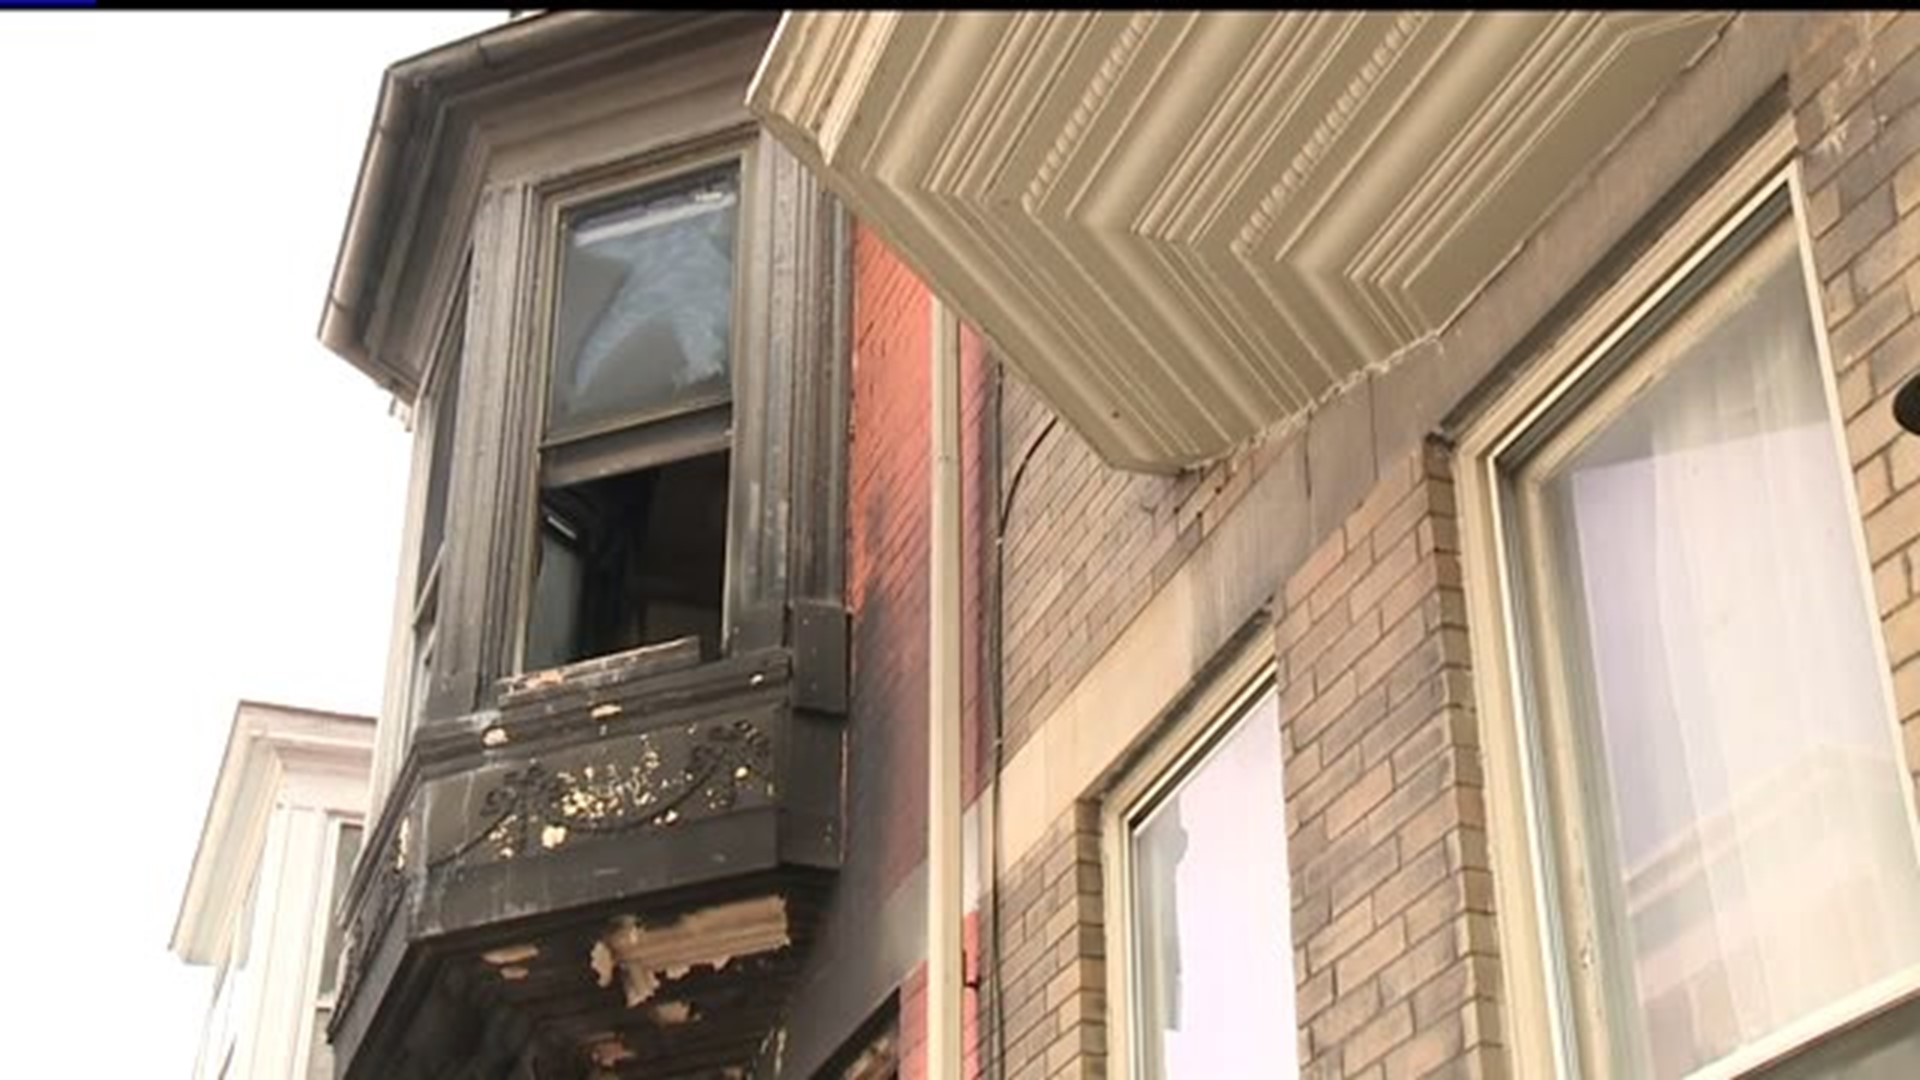 York City Police look to identify three arson suspects